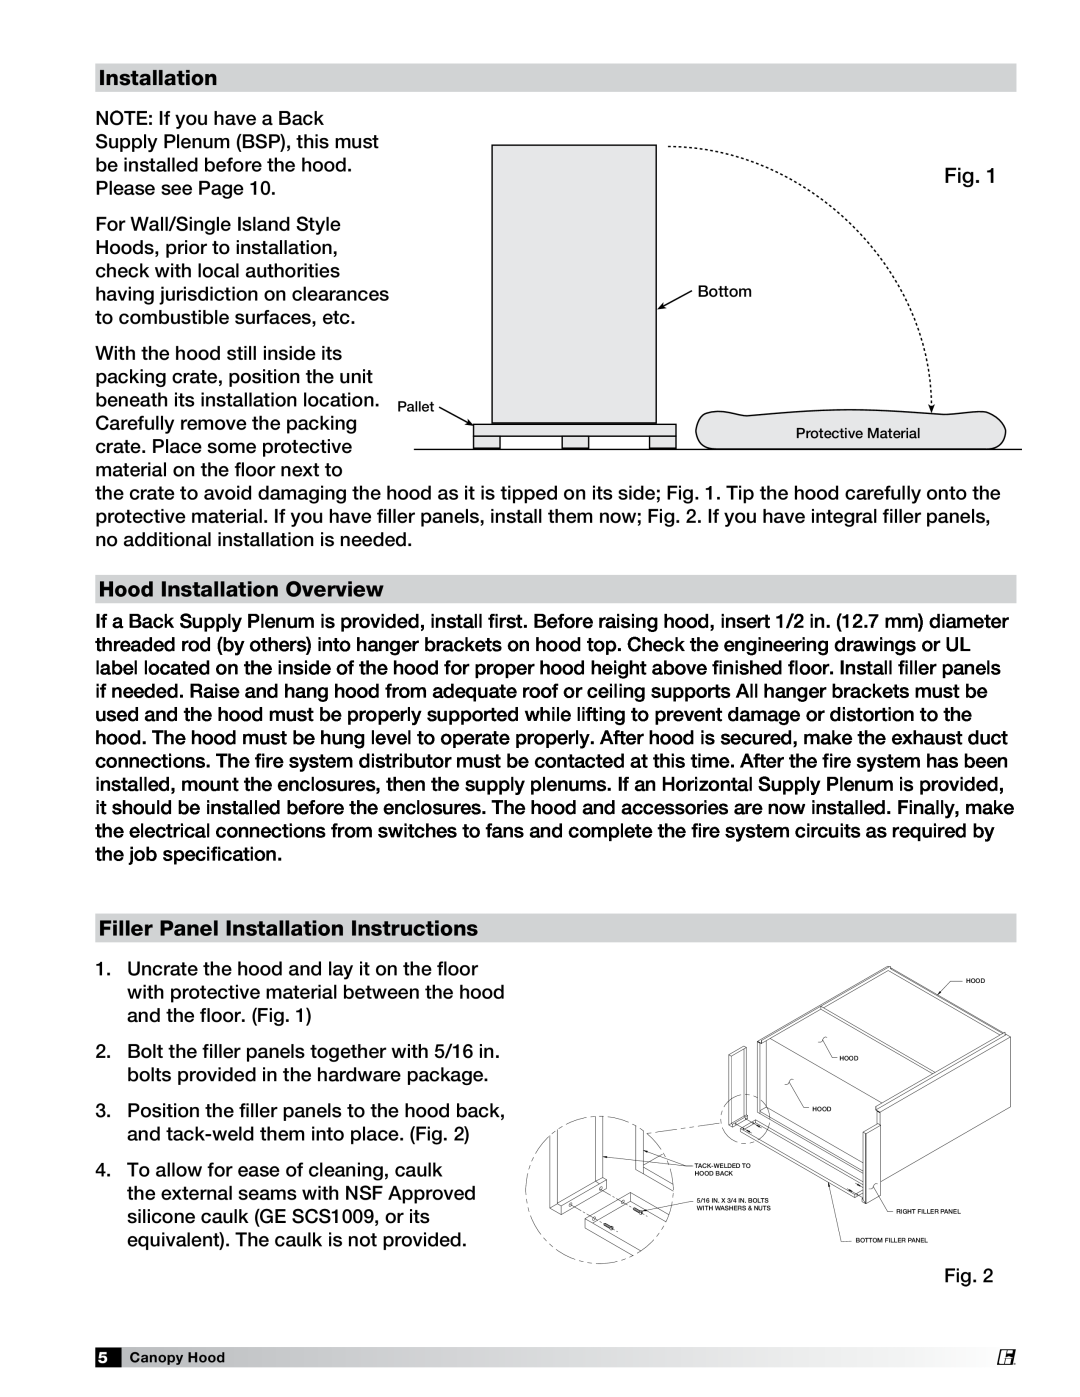 Greenheck Fan 452413 manual Hood Installation Overview, Filler Panel Installation Instructions 